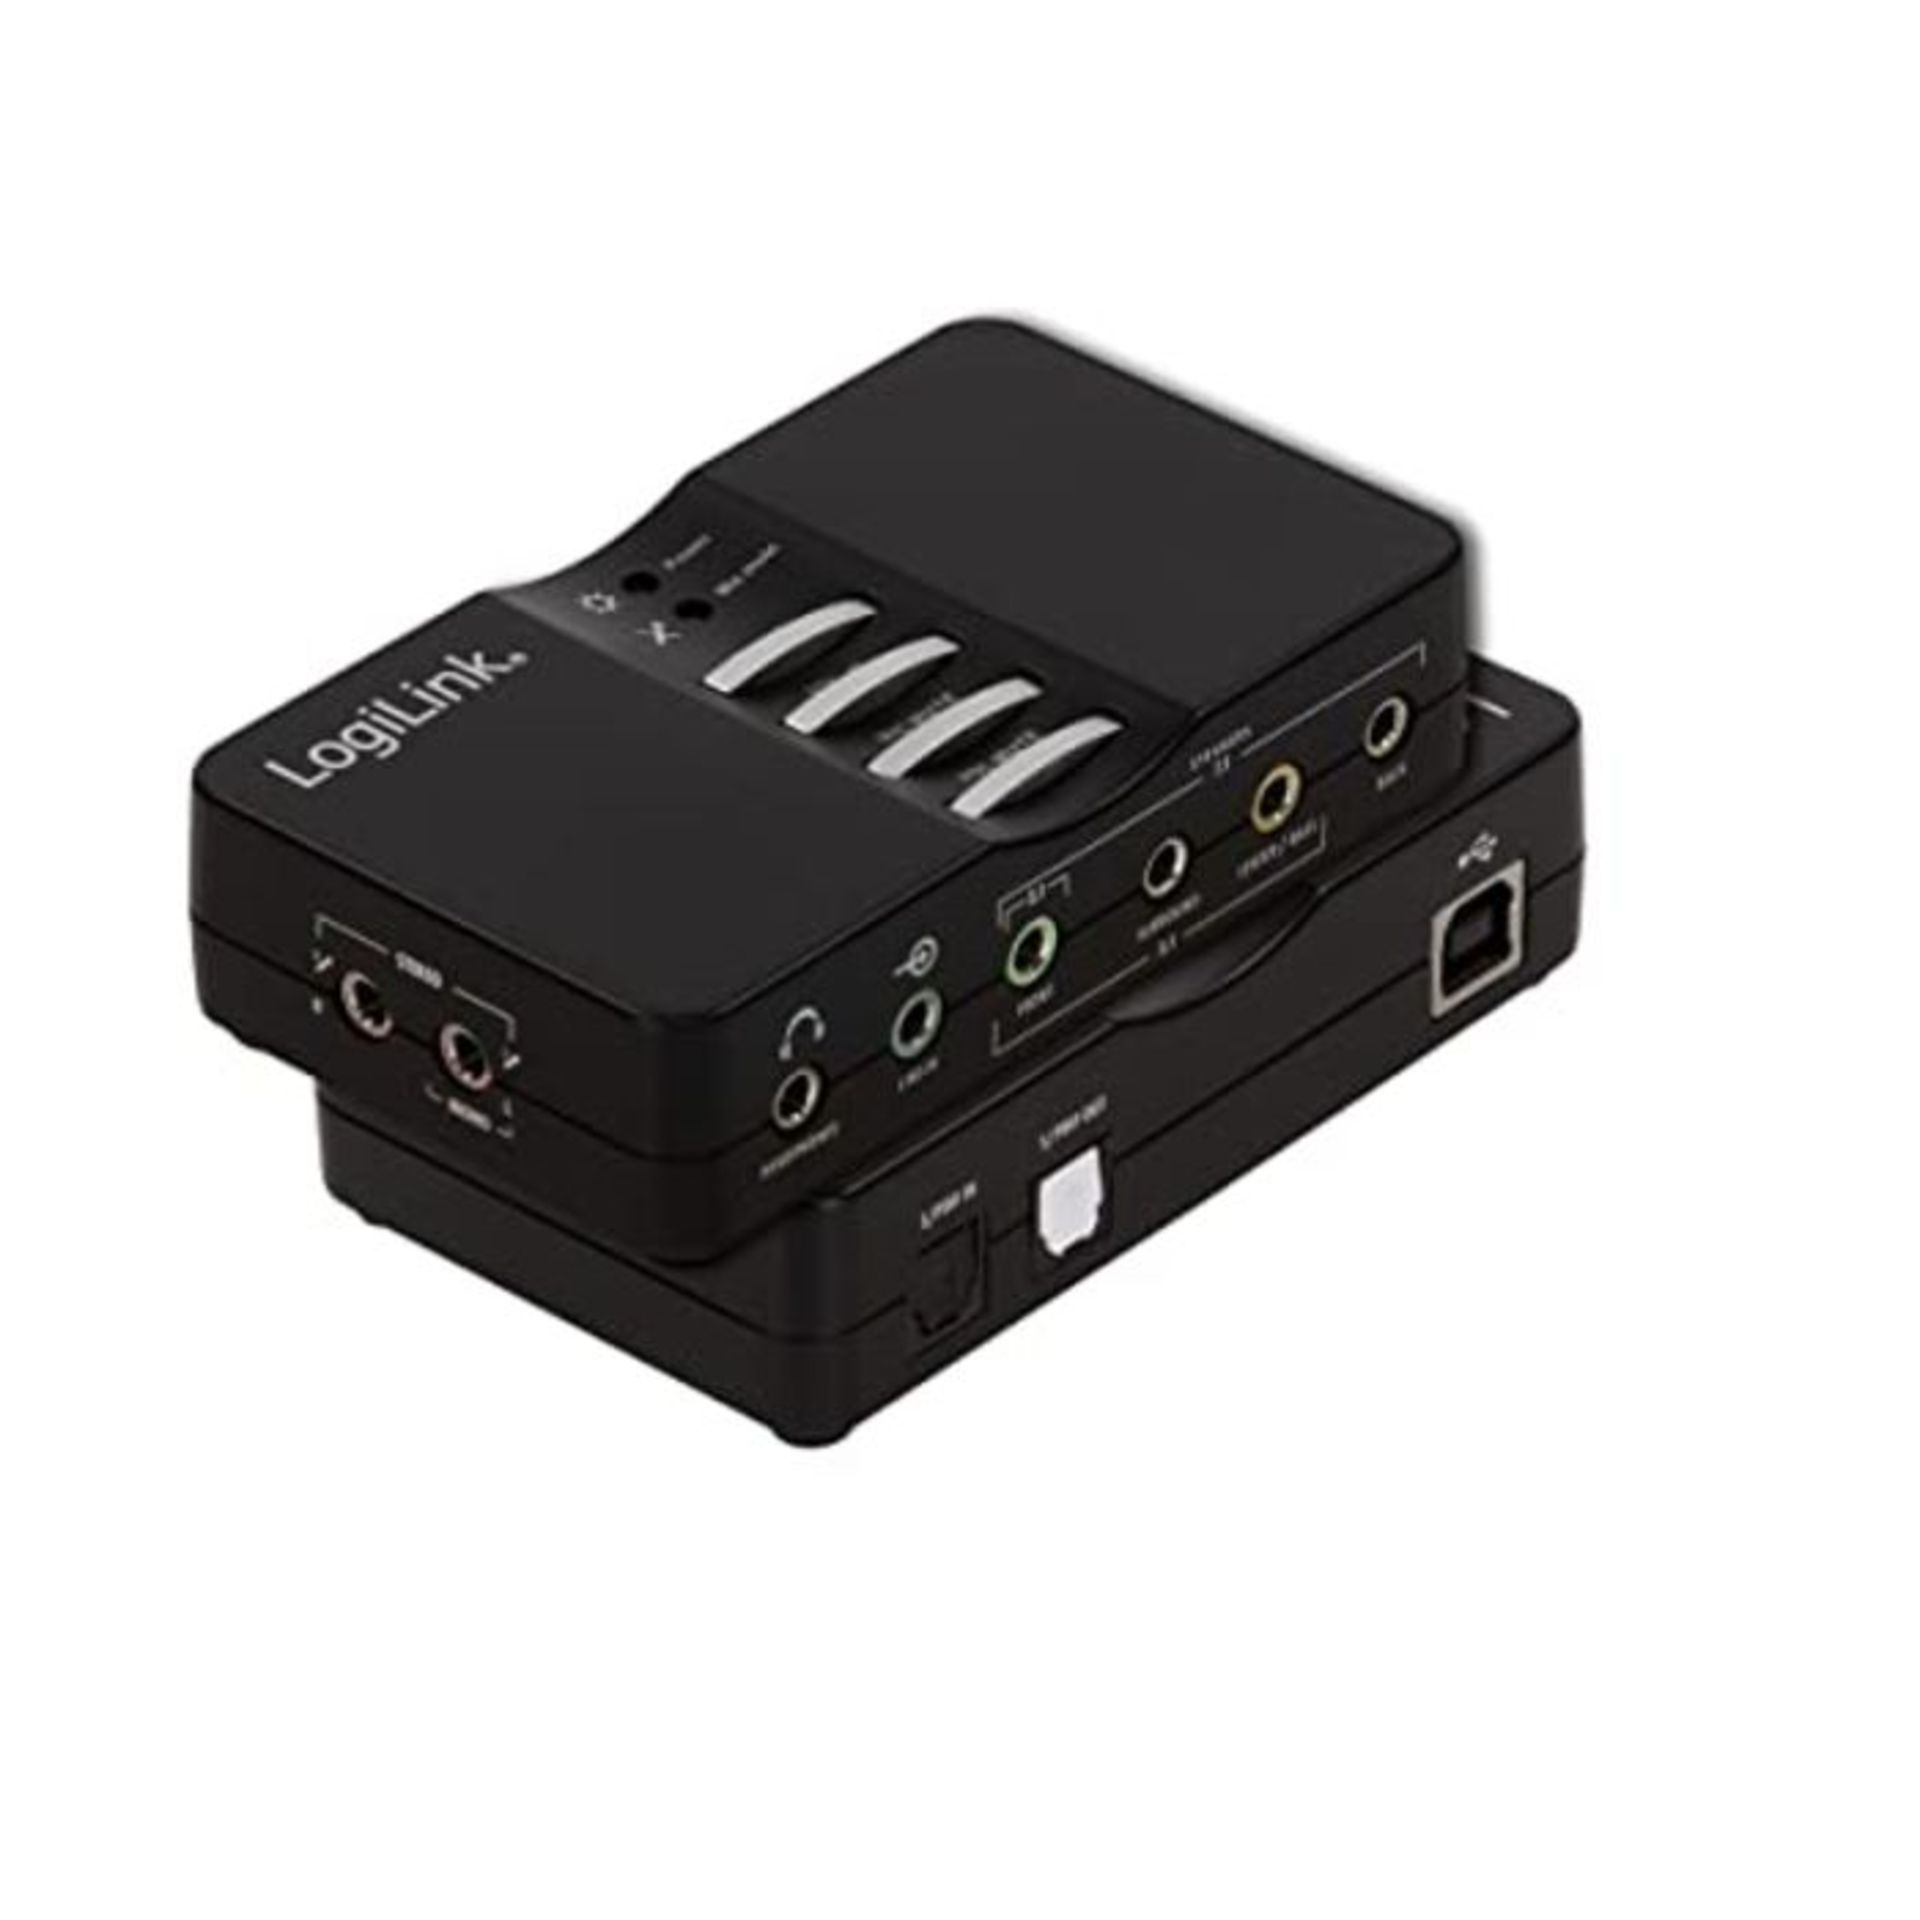 Logilink USB 2.0 7.1 Channel Sound Box